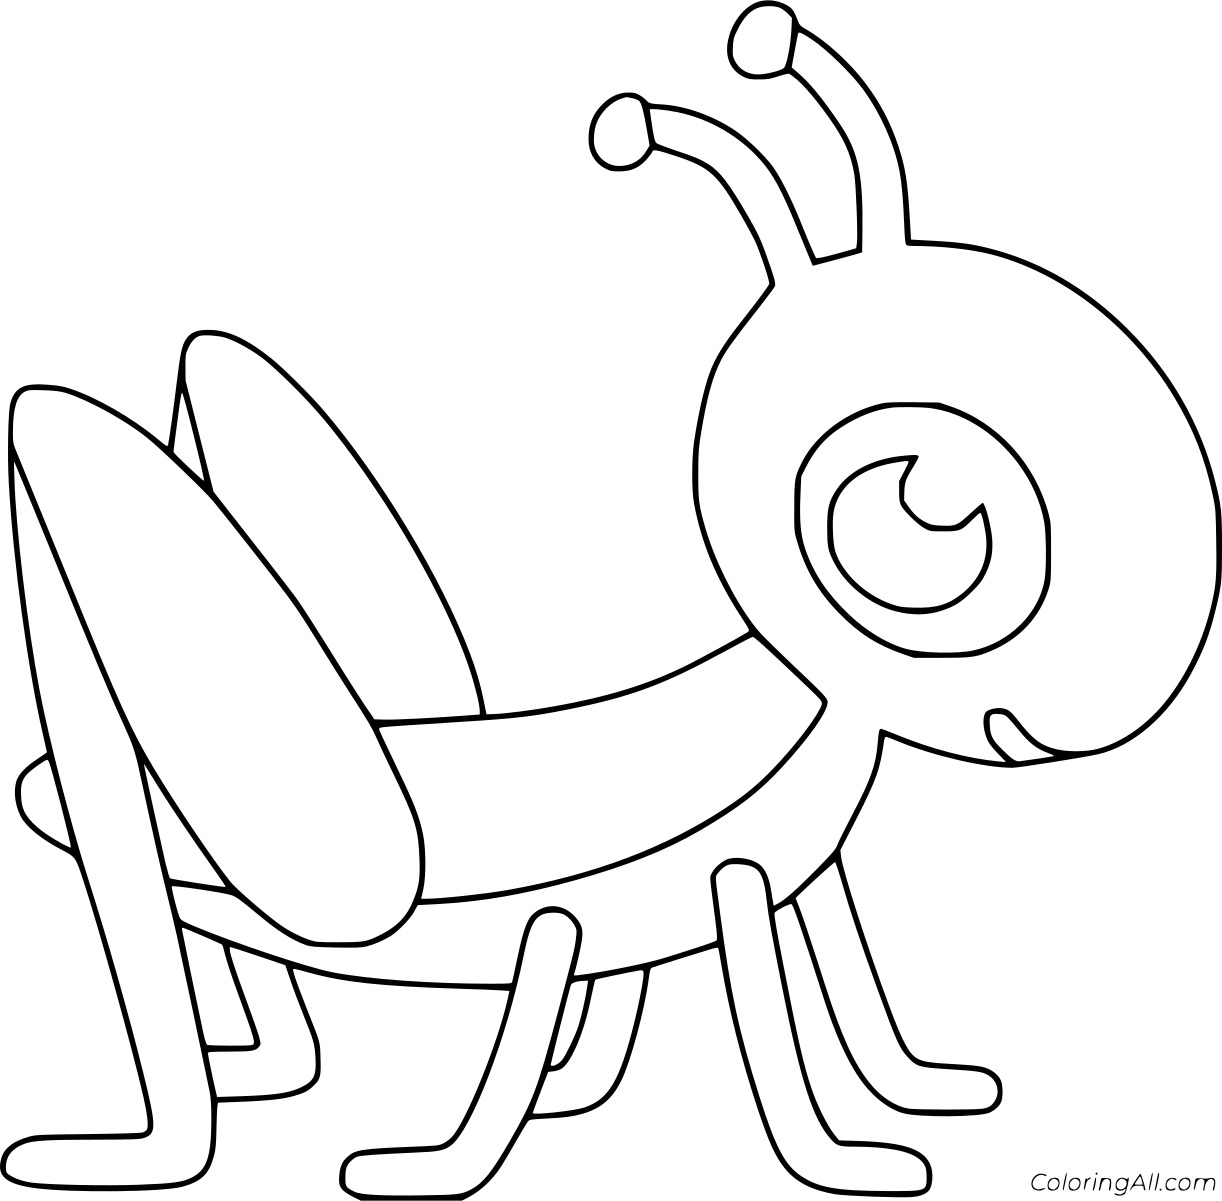 Blank Cartoon Grasshopper